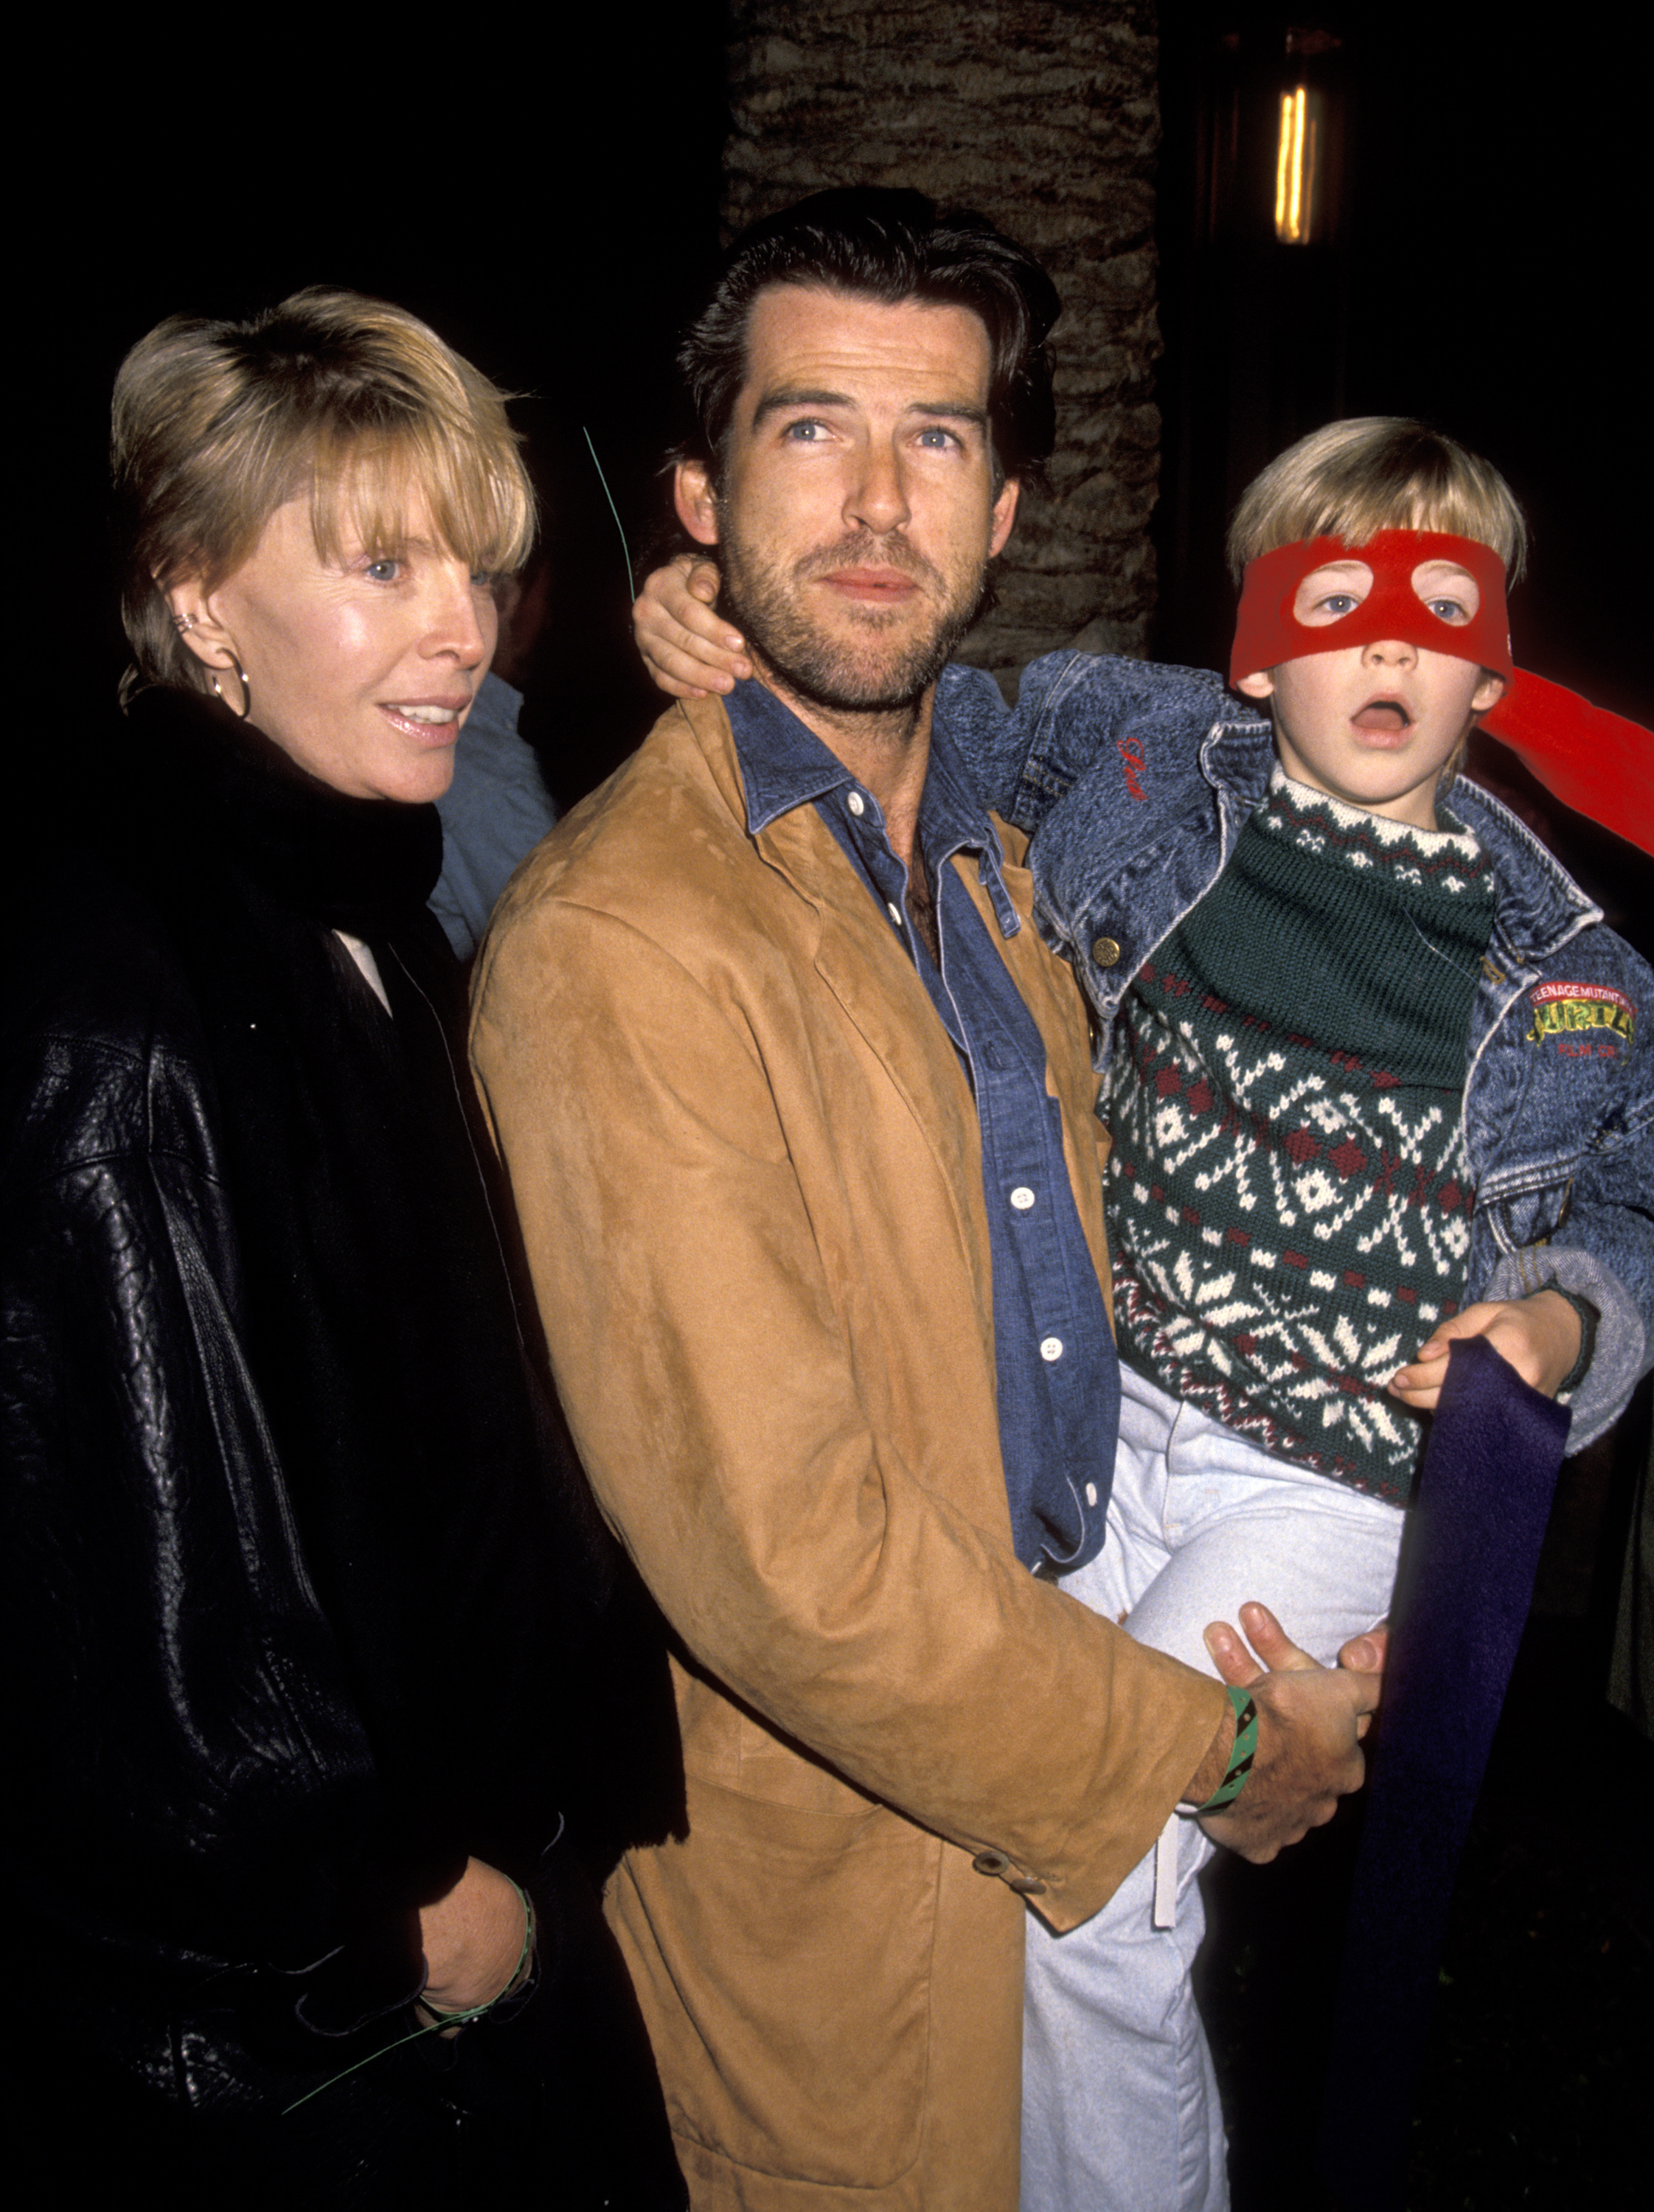 Cassandra Harris, Pierce Brosnan, and Sean Brosnan at the "Teenage Mutant Ninja Turtles" premiere in 1990. | Source: Getty Images